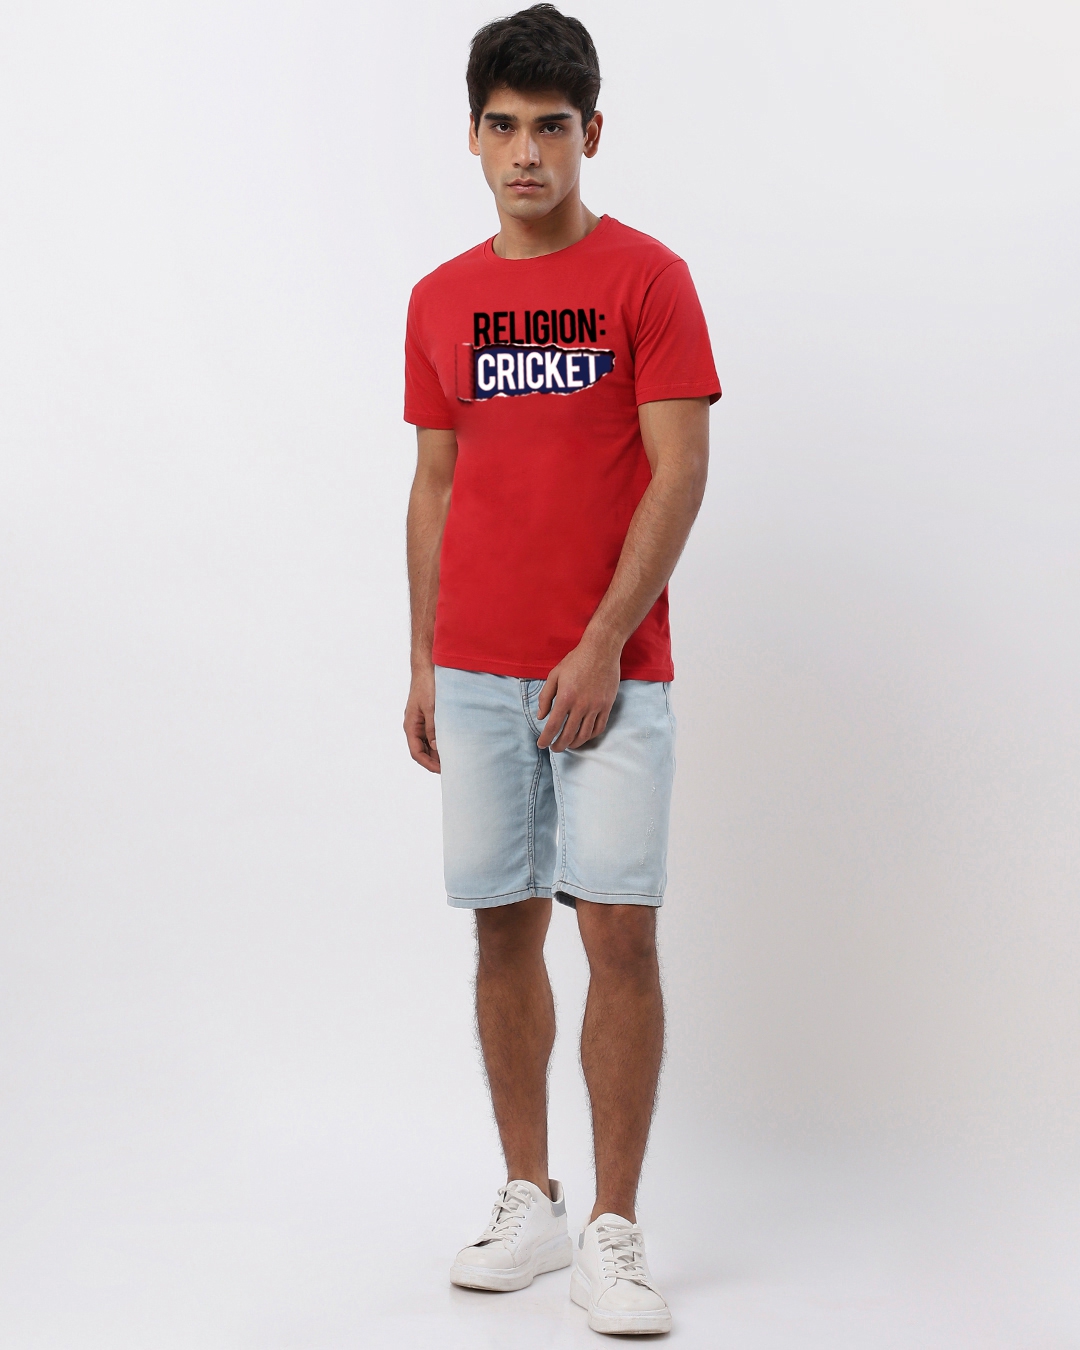 Shop Men's Red Religion Cricket T-shirt-Design